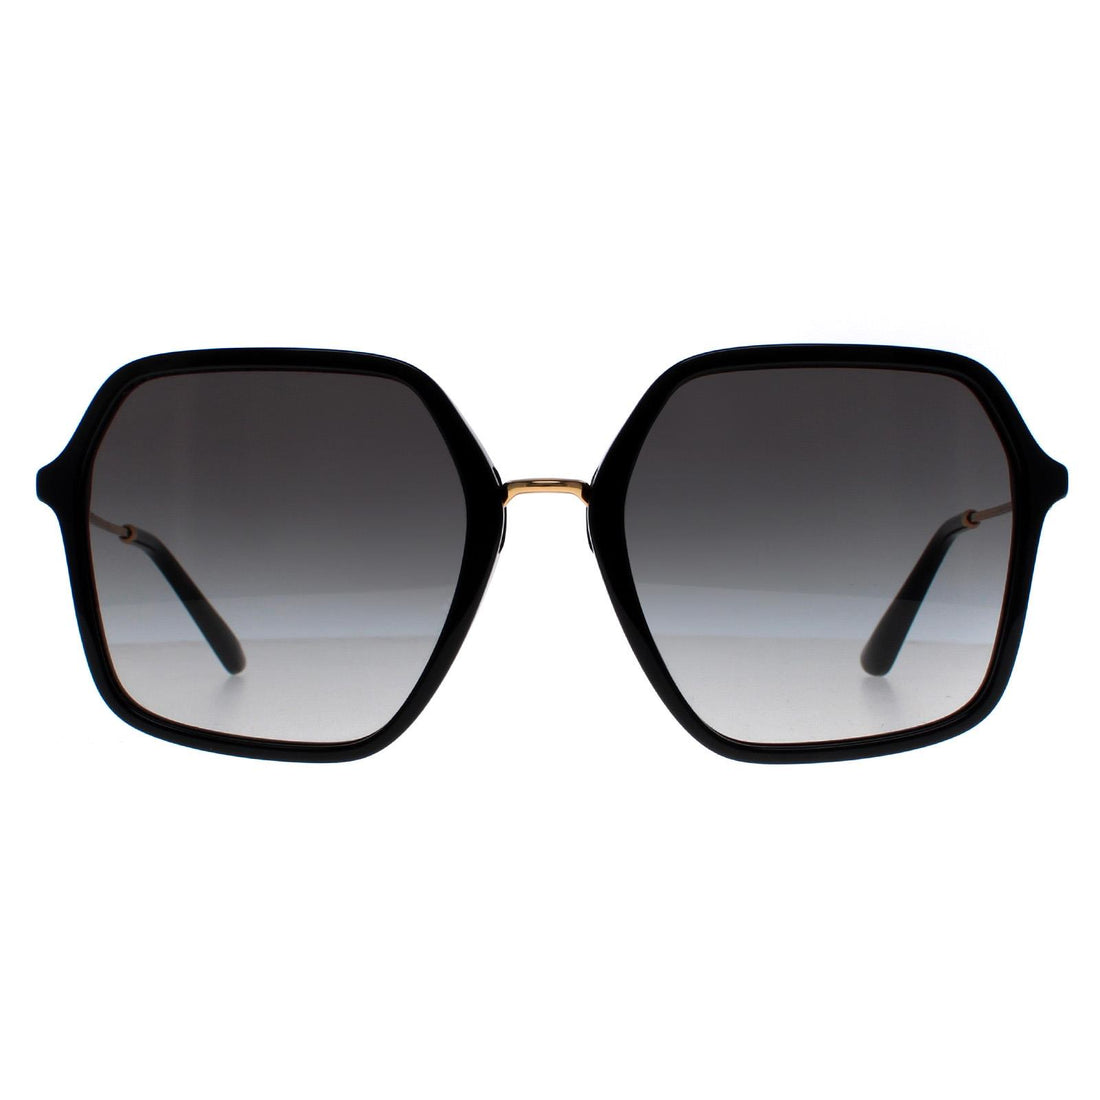 Dolce & Gabbana DG4422 Sunglasses Black / Grey Gradient